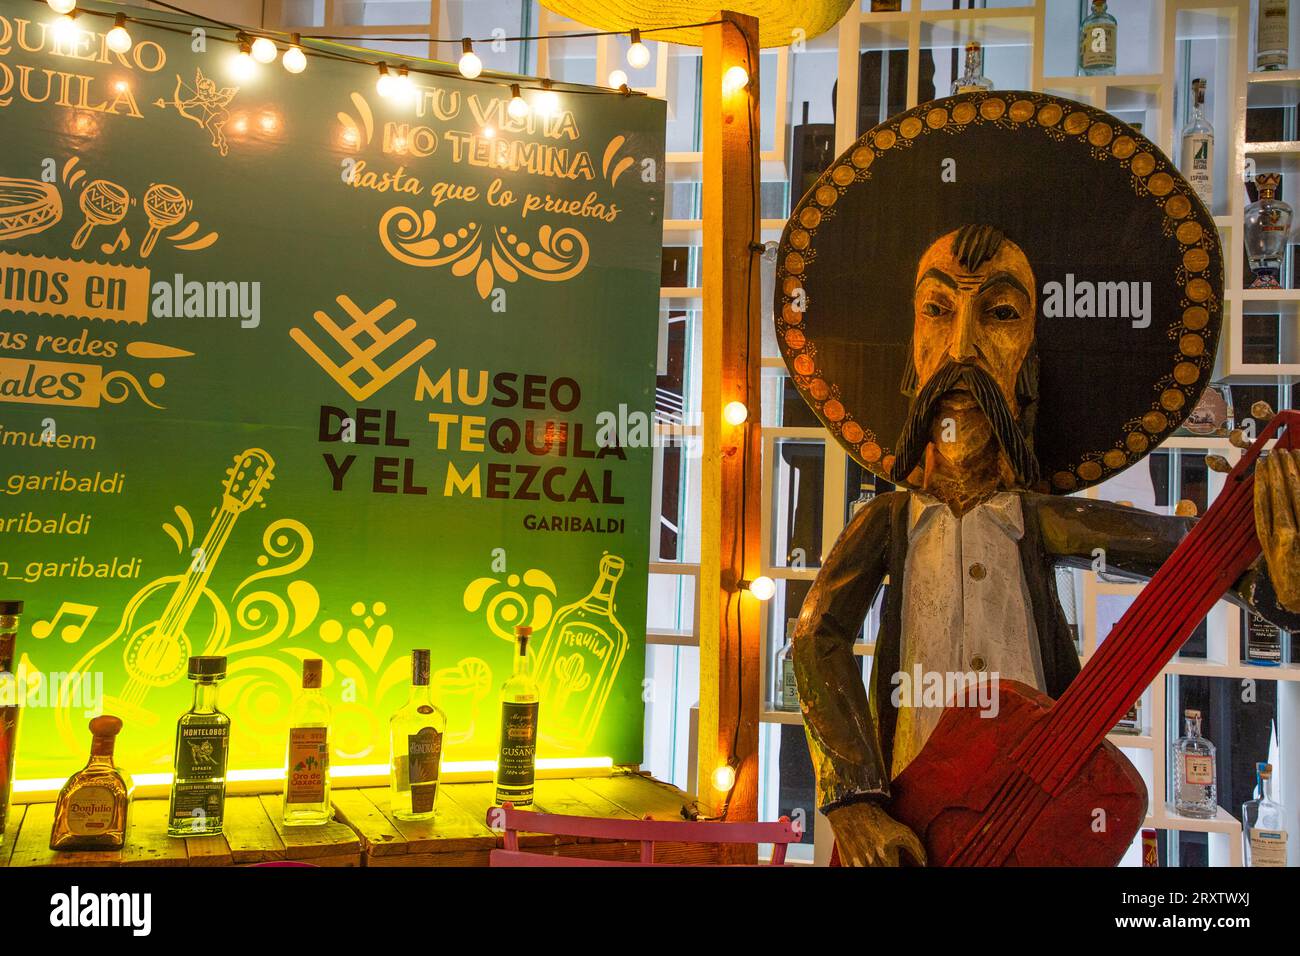 Museum of Tequila and Mezcal, Mexiko-Stadt, Mexiko, Nordamerika Stockfoto